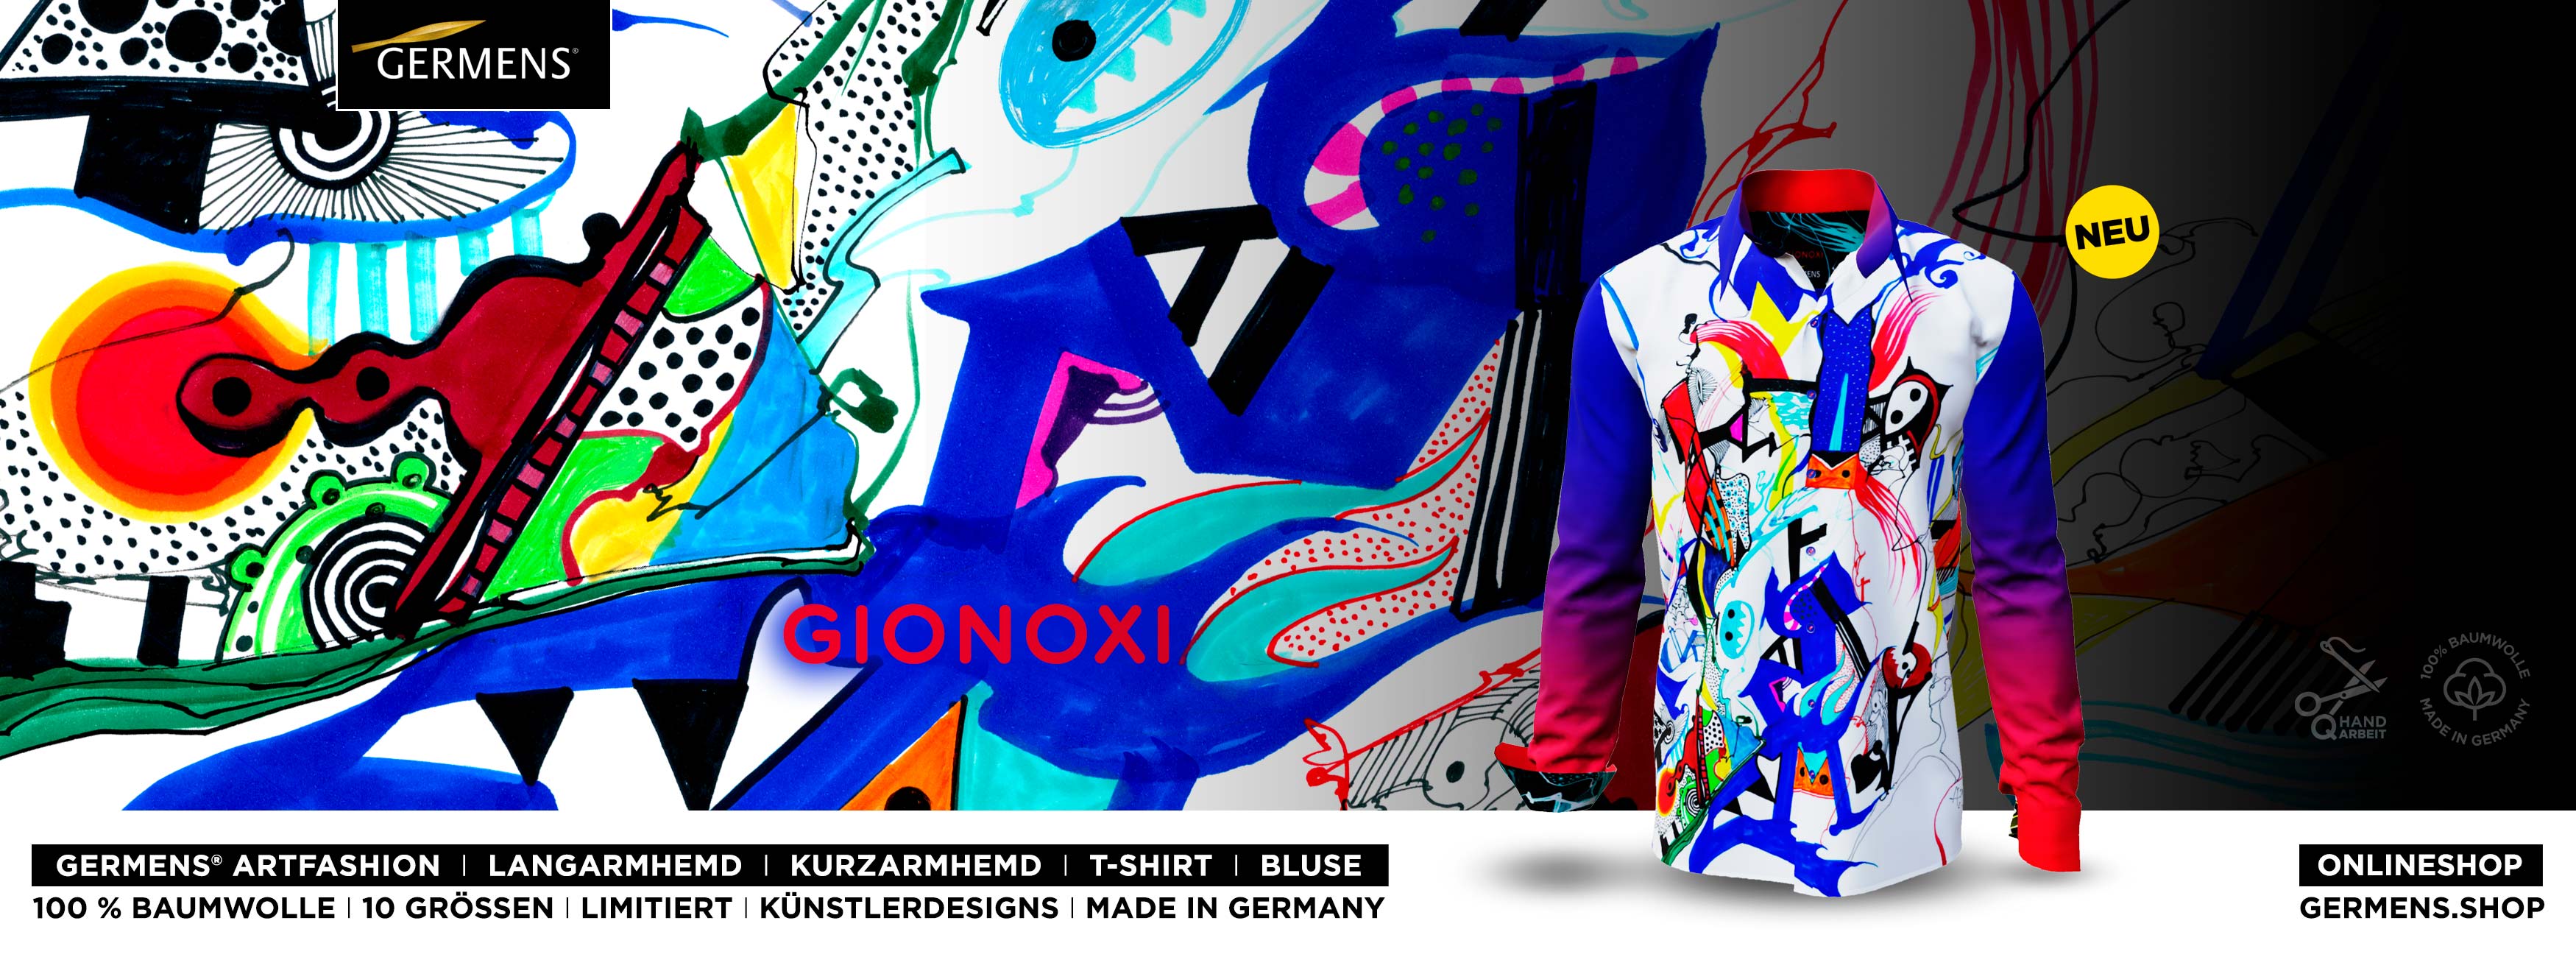 GERMENS® Design GIONOXI (244) Shirts - Blouses - T-shirts